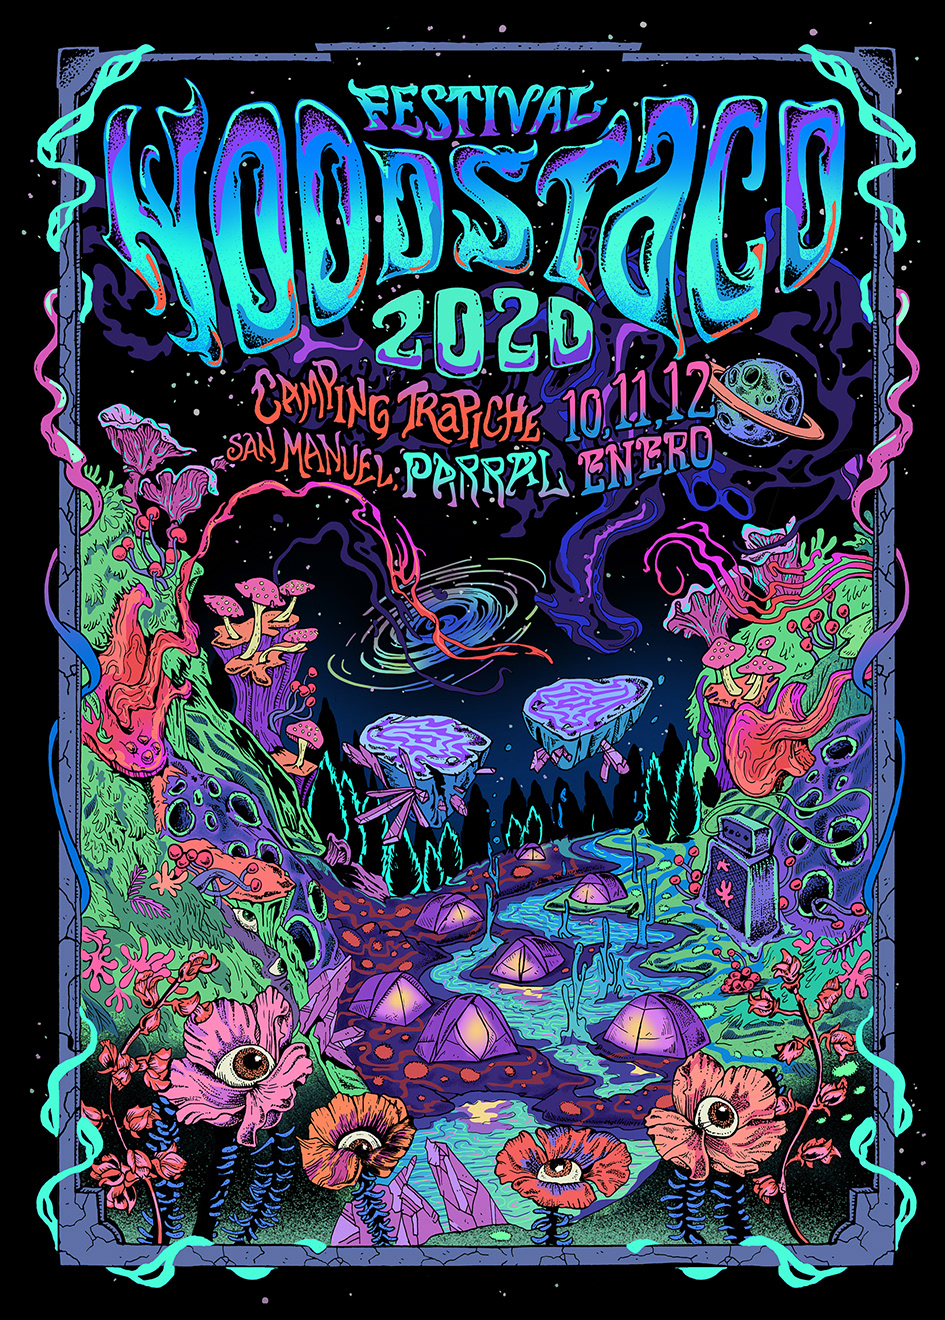 woodstaco festival gig poster Psych psychedelic nakasato rock